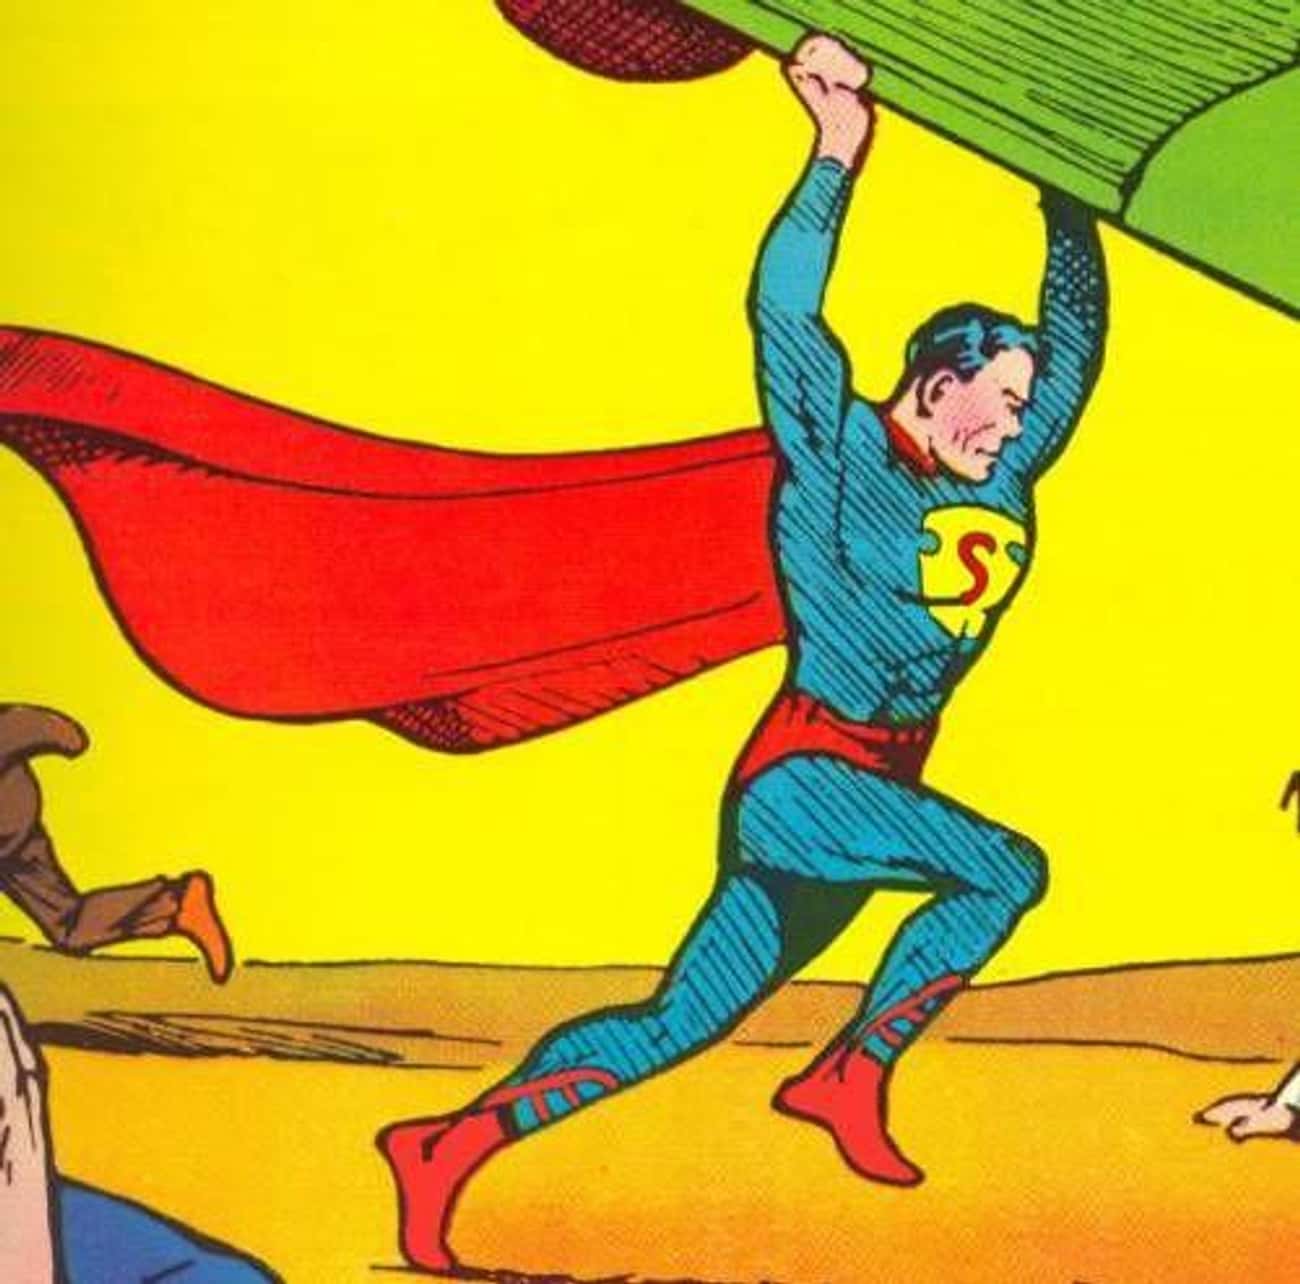 1938: Action Comics #1